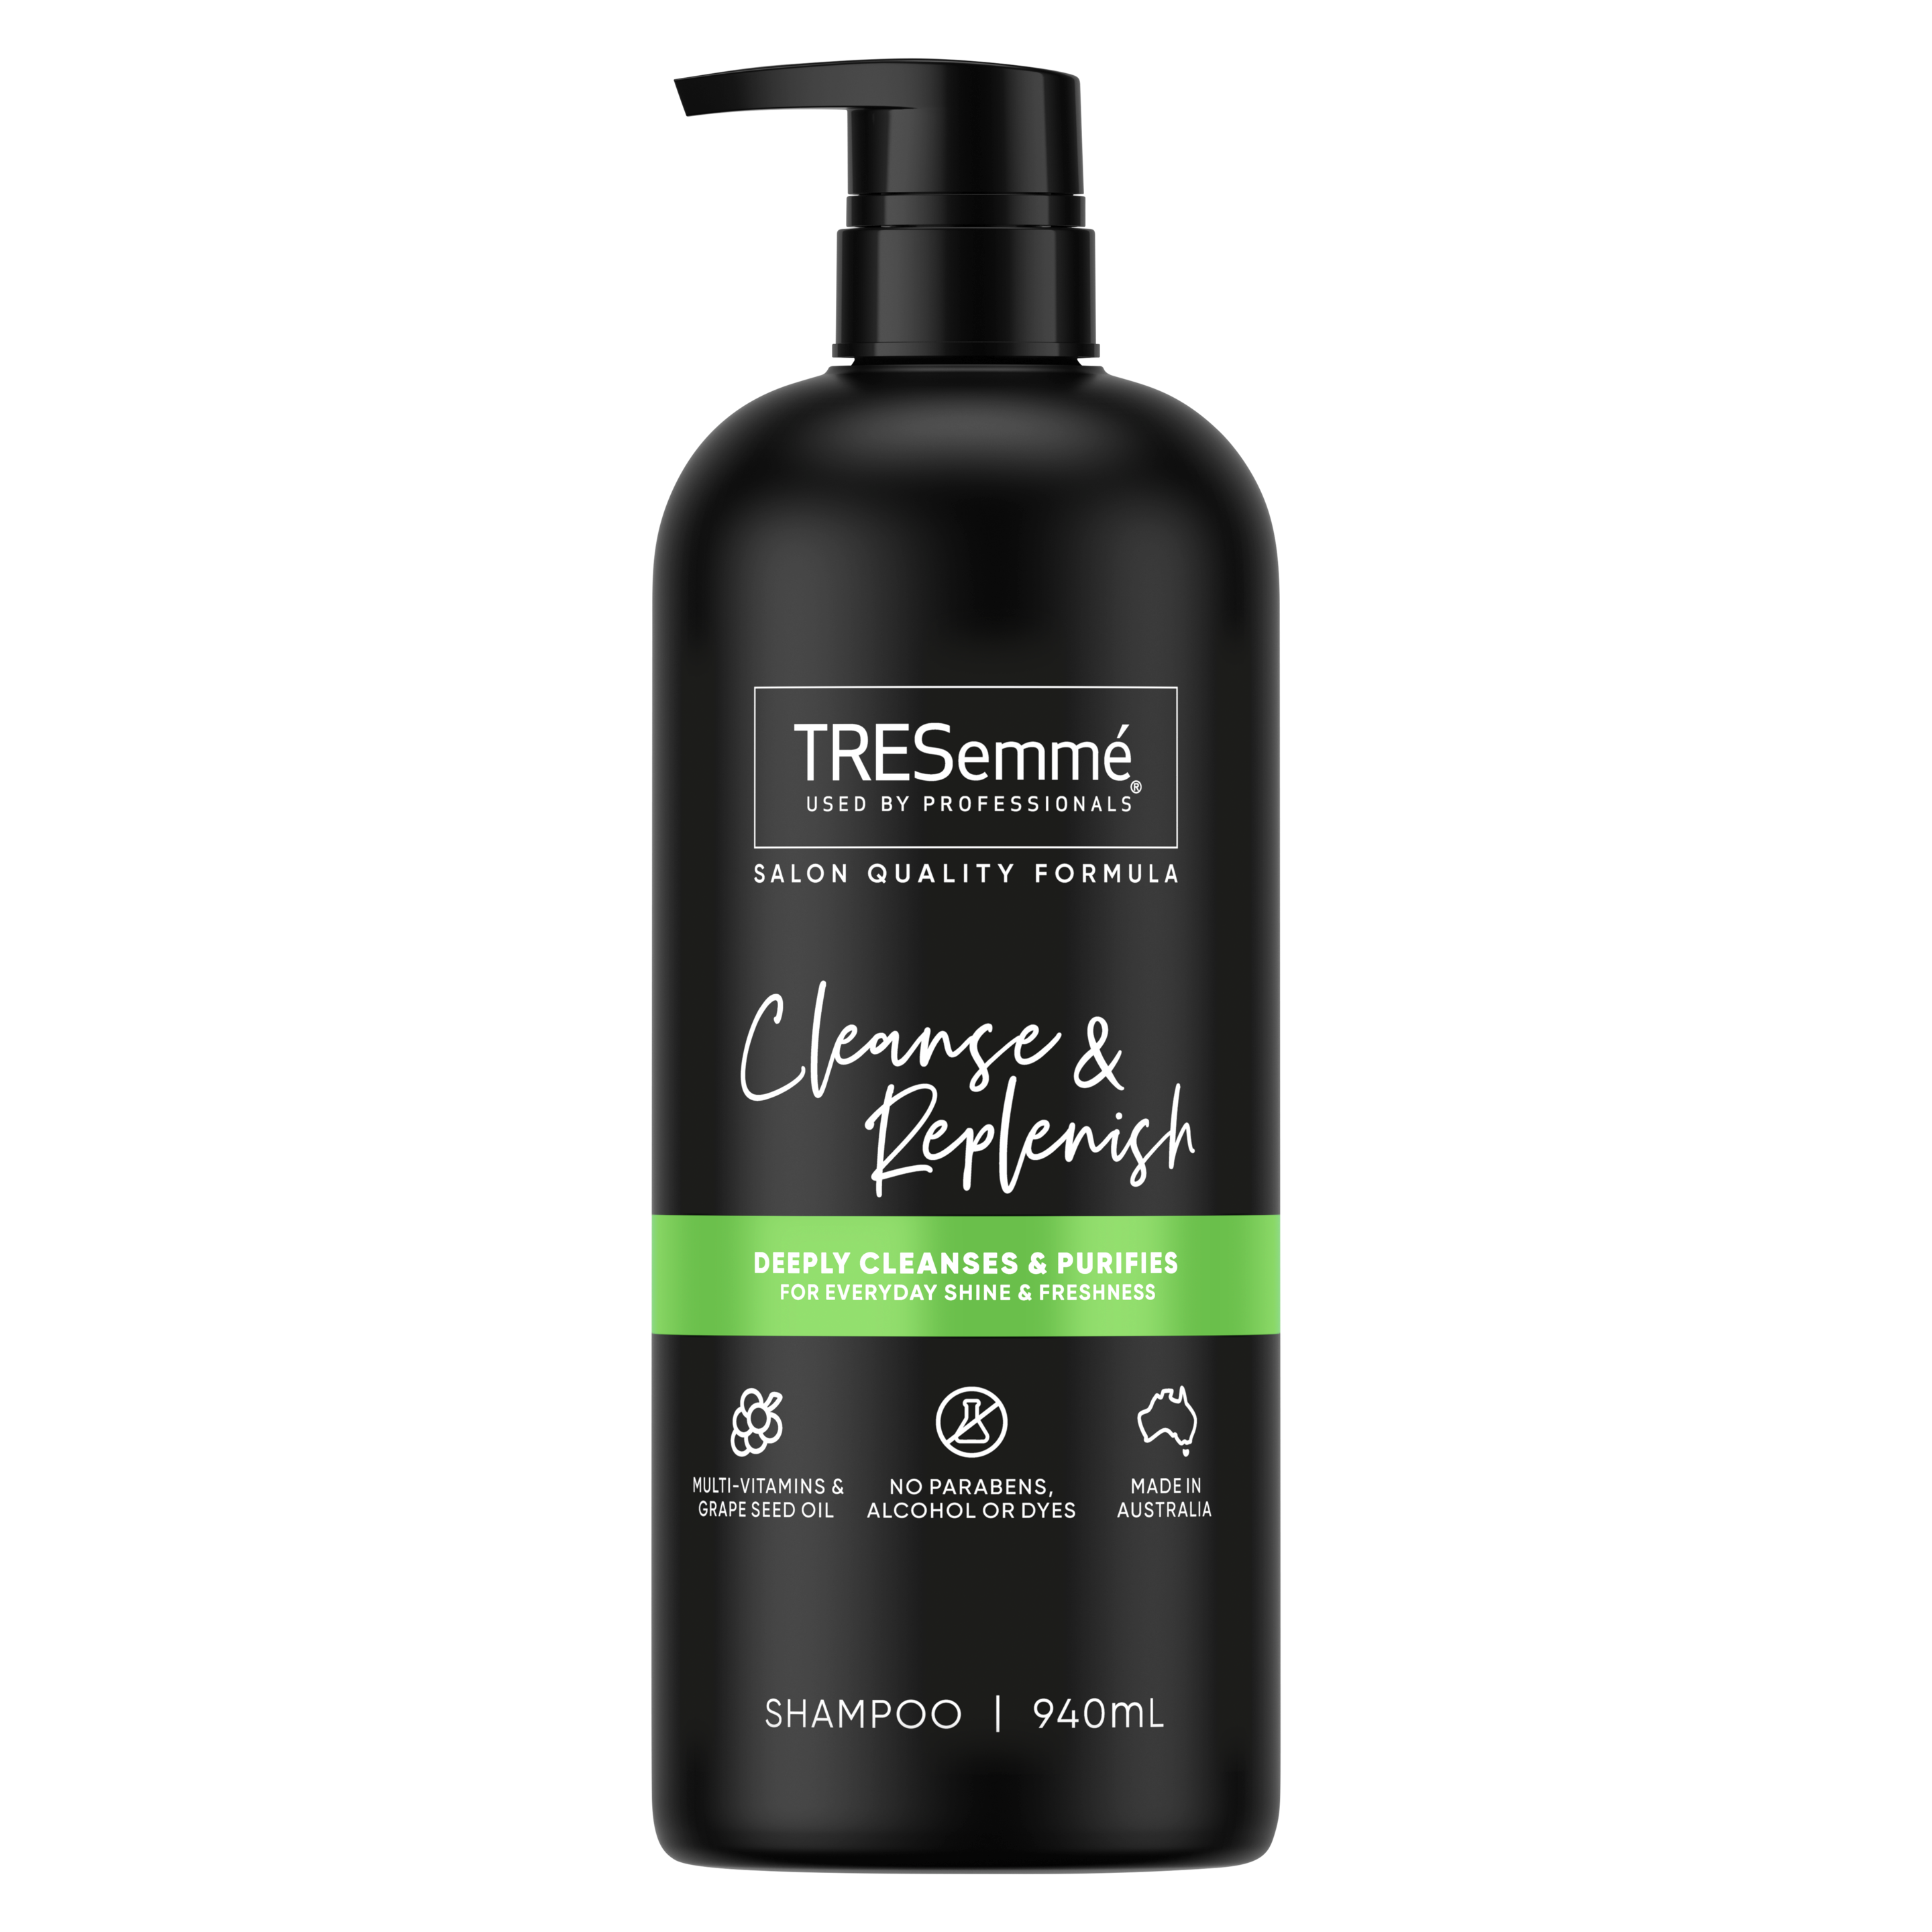 A 940ml bottle of TRESemmé Cleanse & Replenish Shampoo